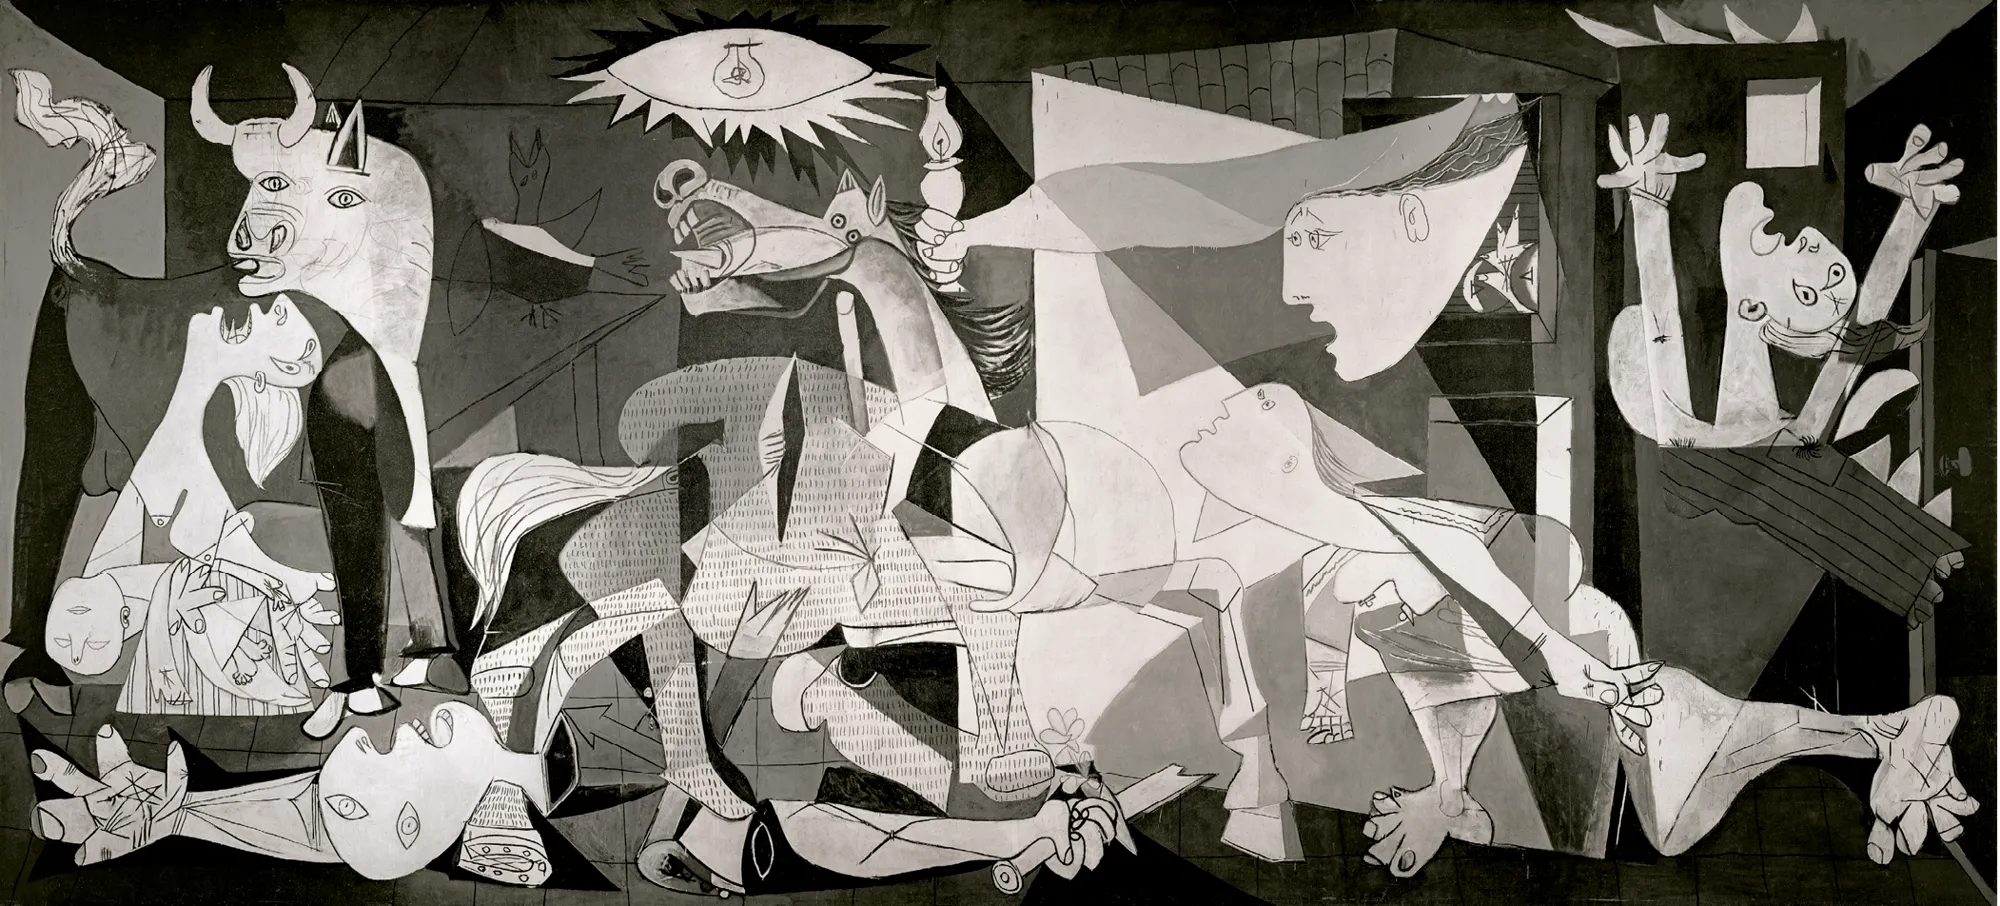 Pablo Picasso, Guernica, 1937, huile sur toile, 3,4 × 7,7 m, Musée national Reina Sofia, Madrid.